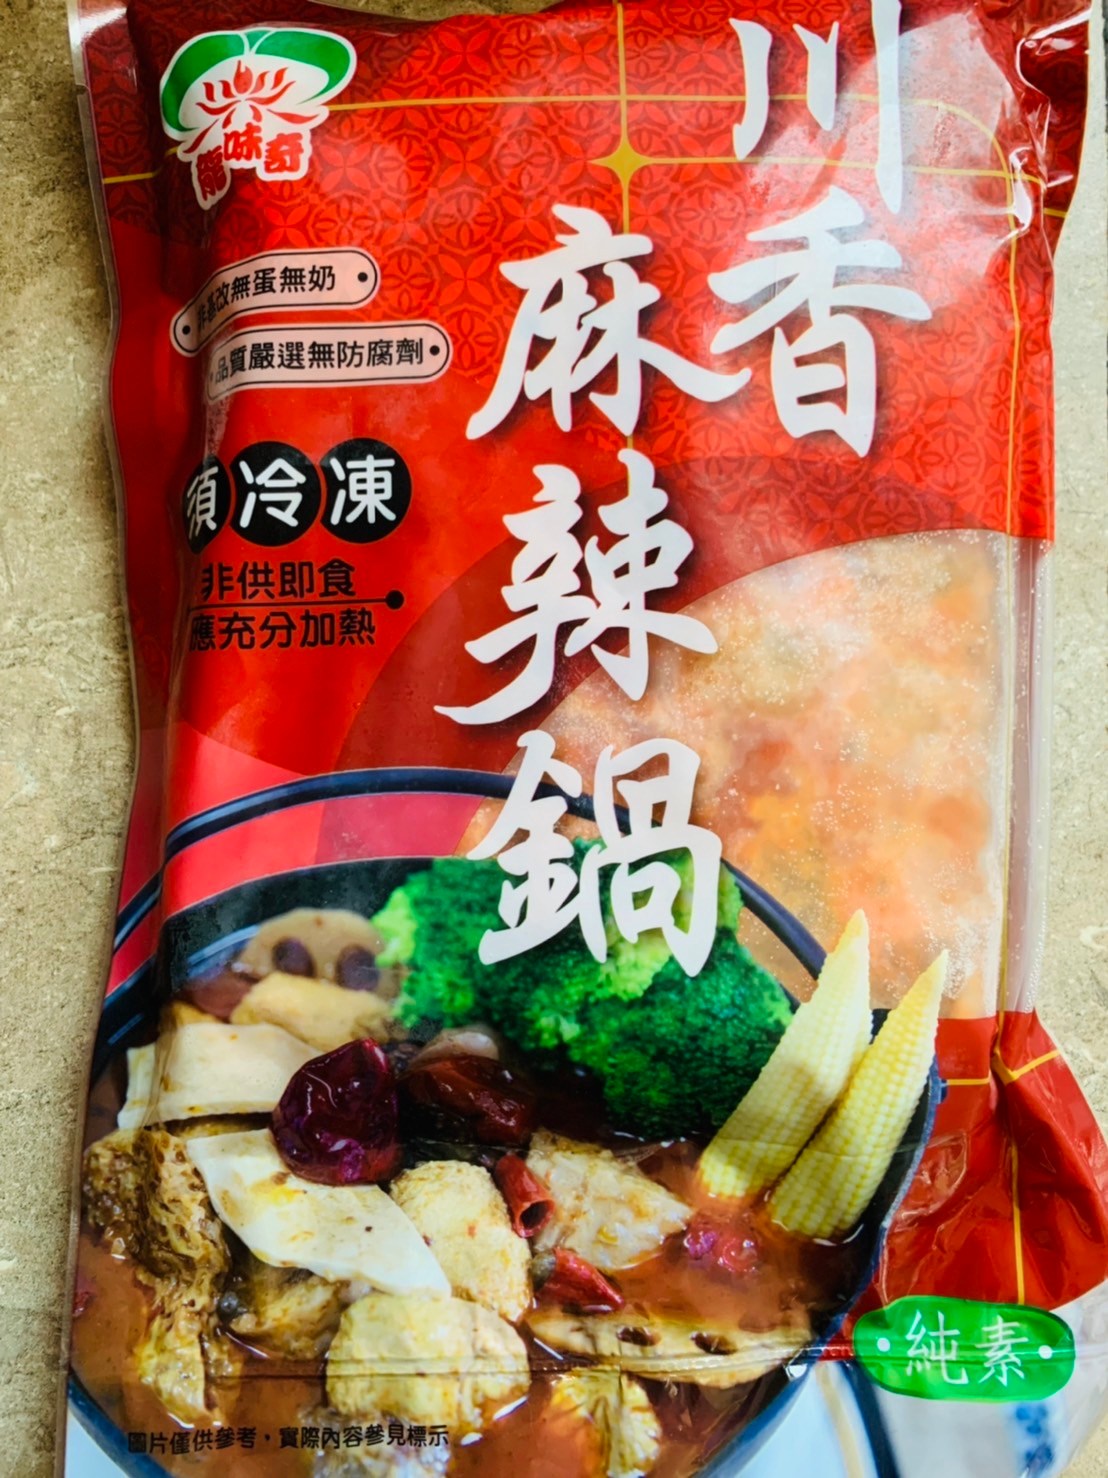 2 Packs Deal - Vegan Sichuan Mala Soup  [龍味奇] 川味麻辣鍋 - 全素 - 2件組